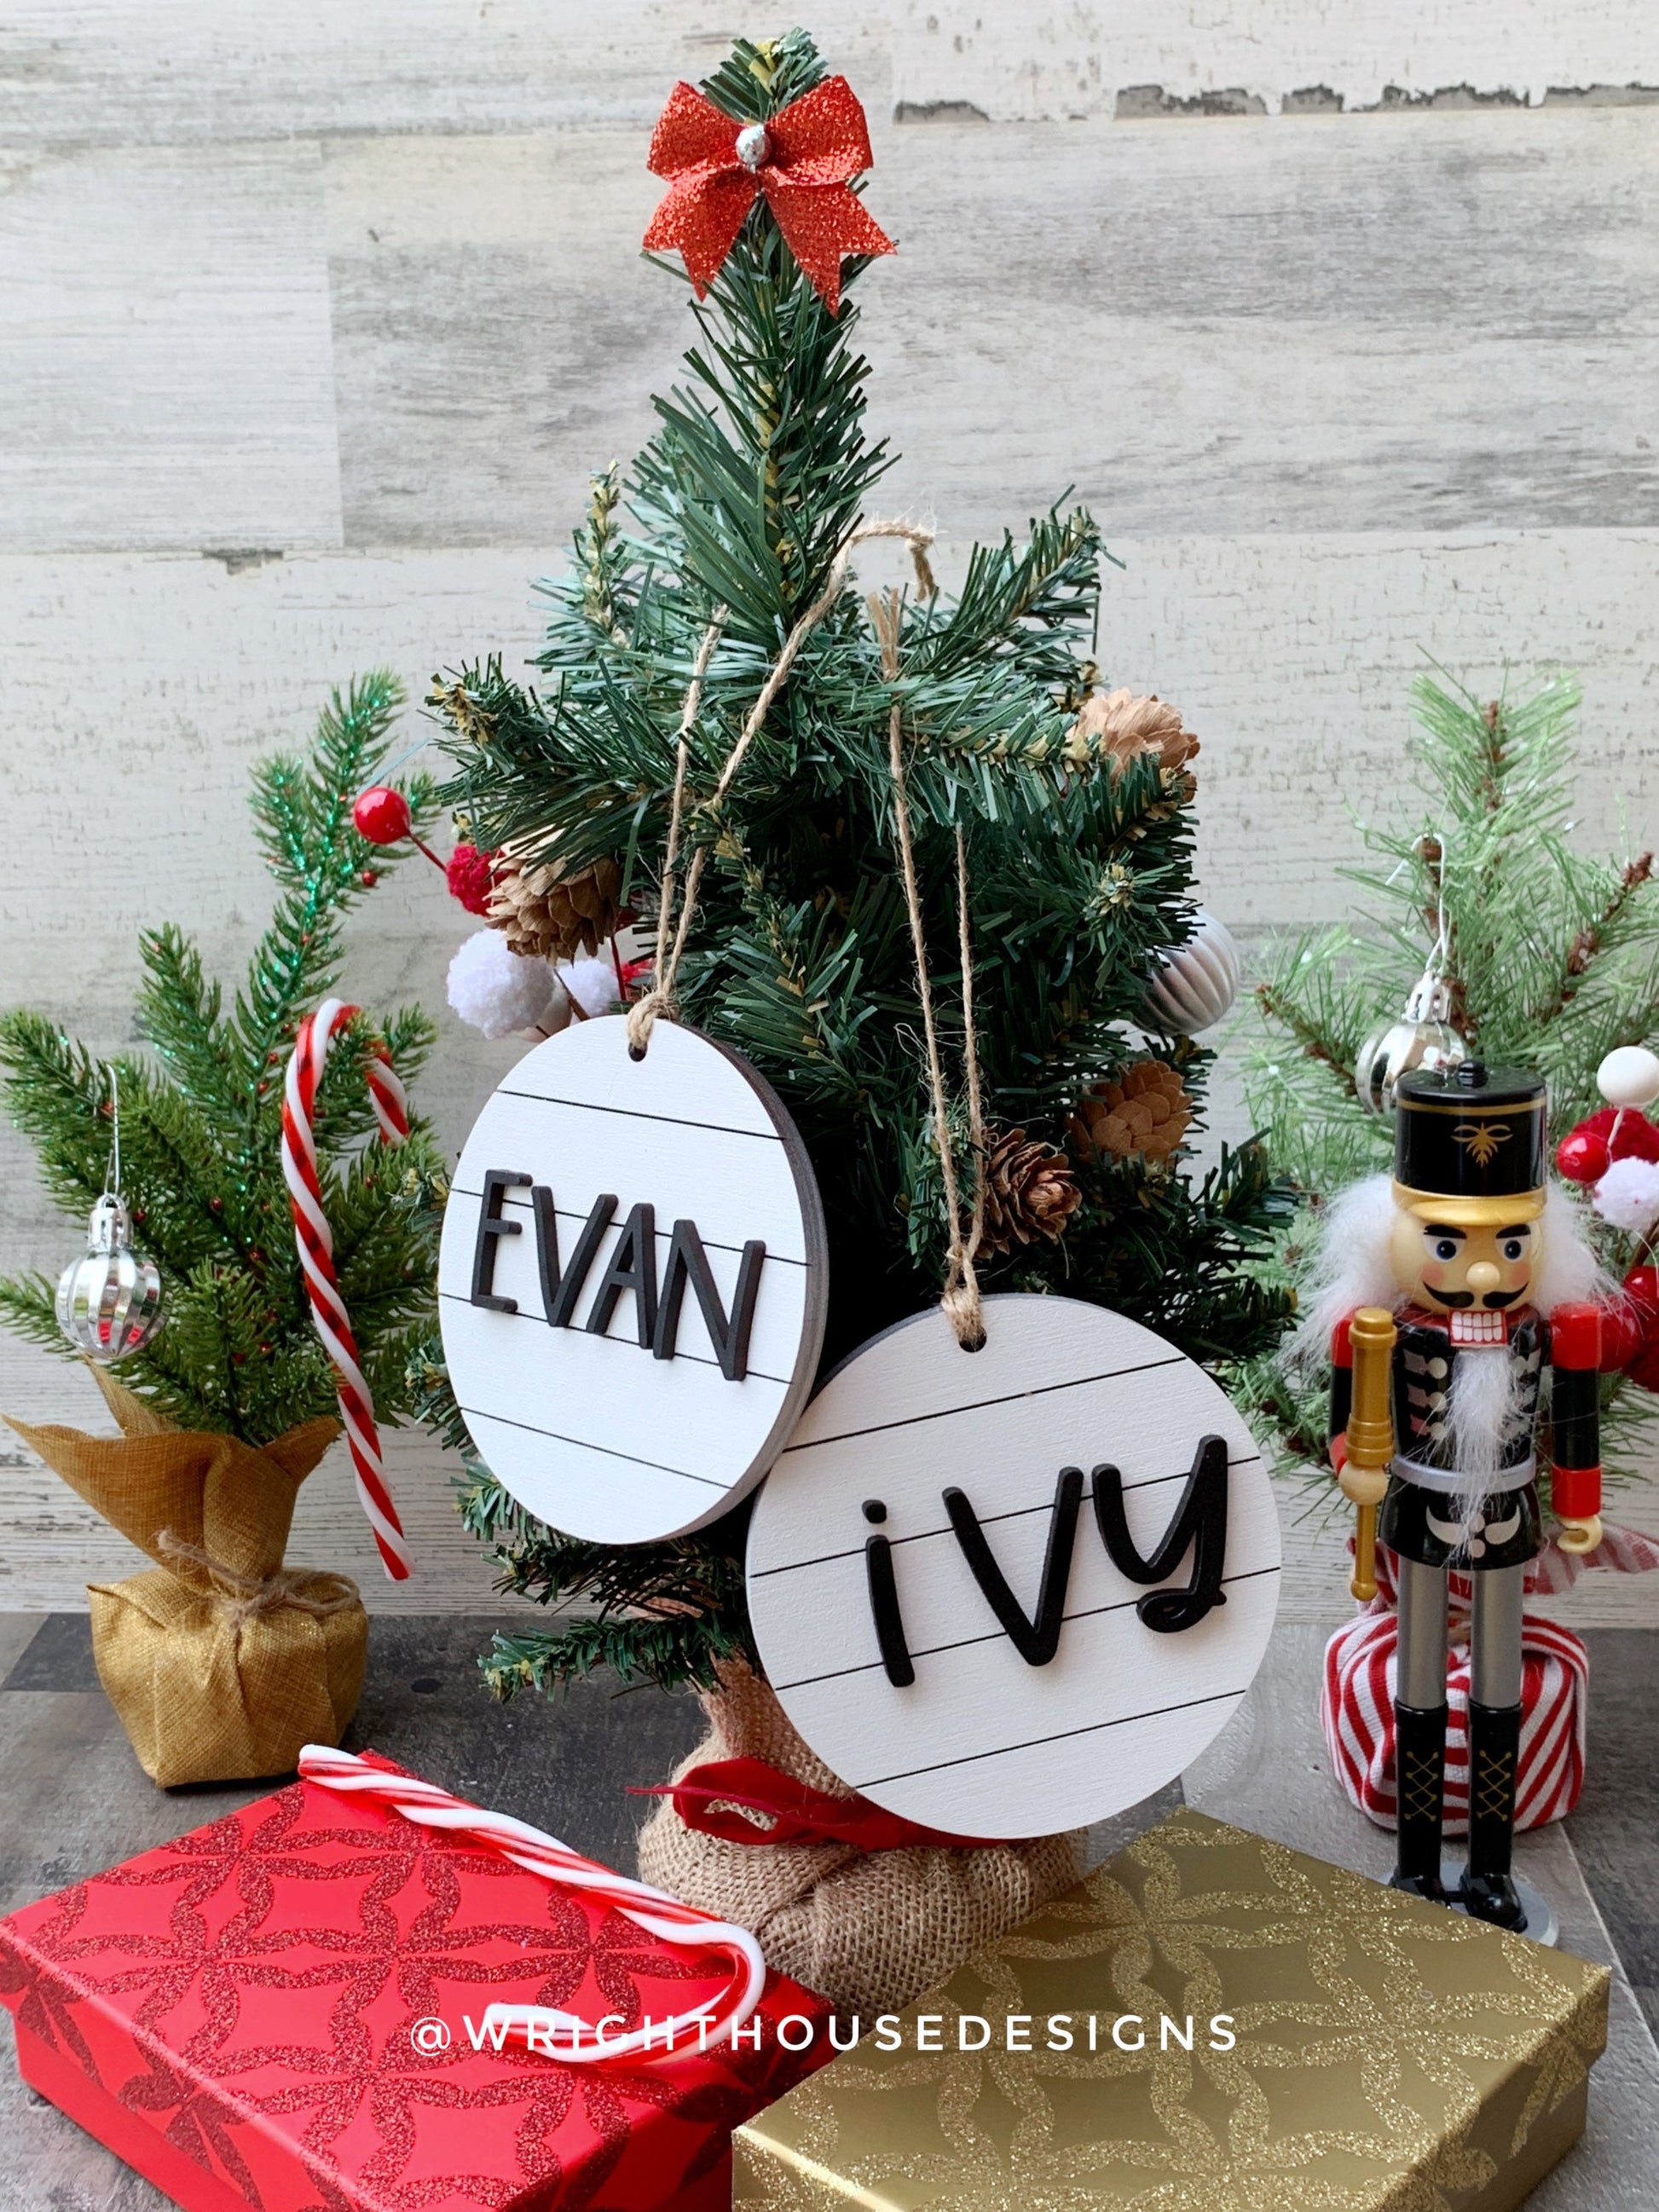 Personalized Farmhouse Christmas Tree Ornament - Wooden Shiplap Stocking Tag - Secret Santa Gift - Holiday Decor